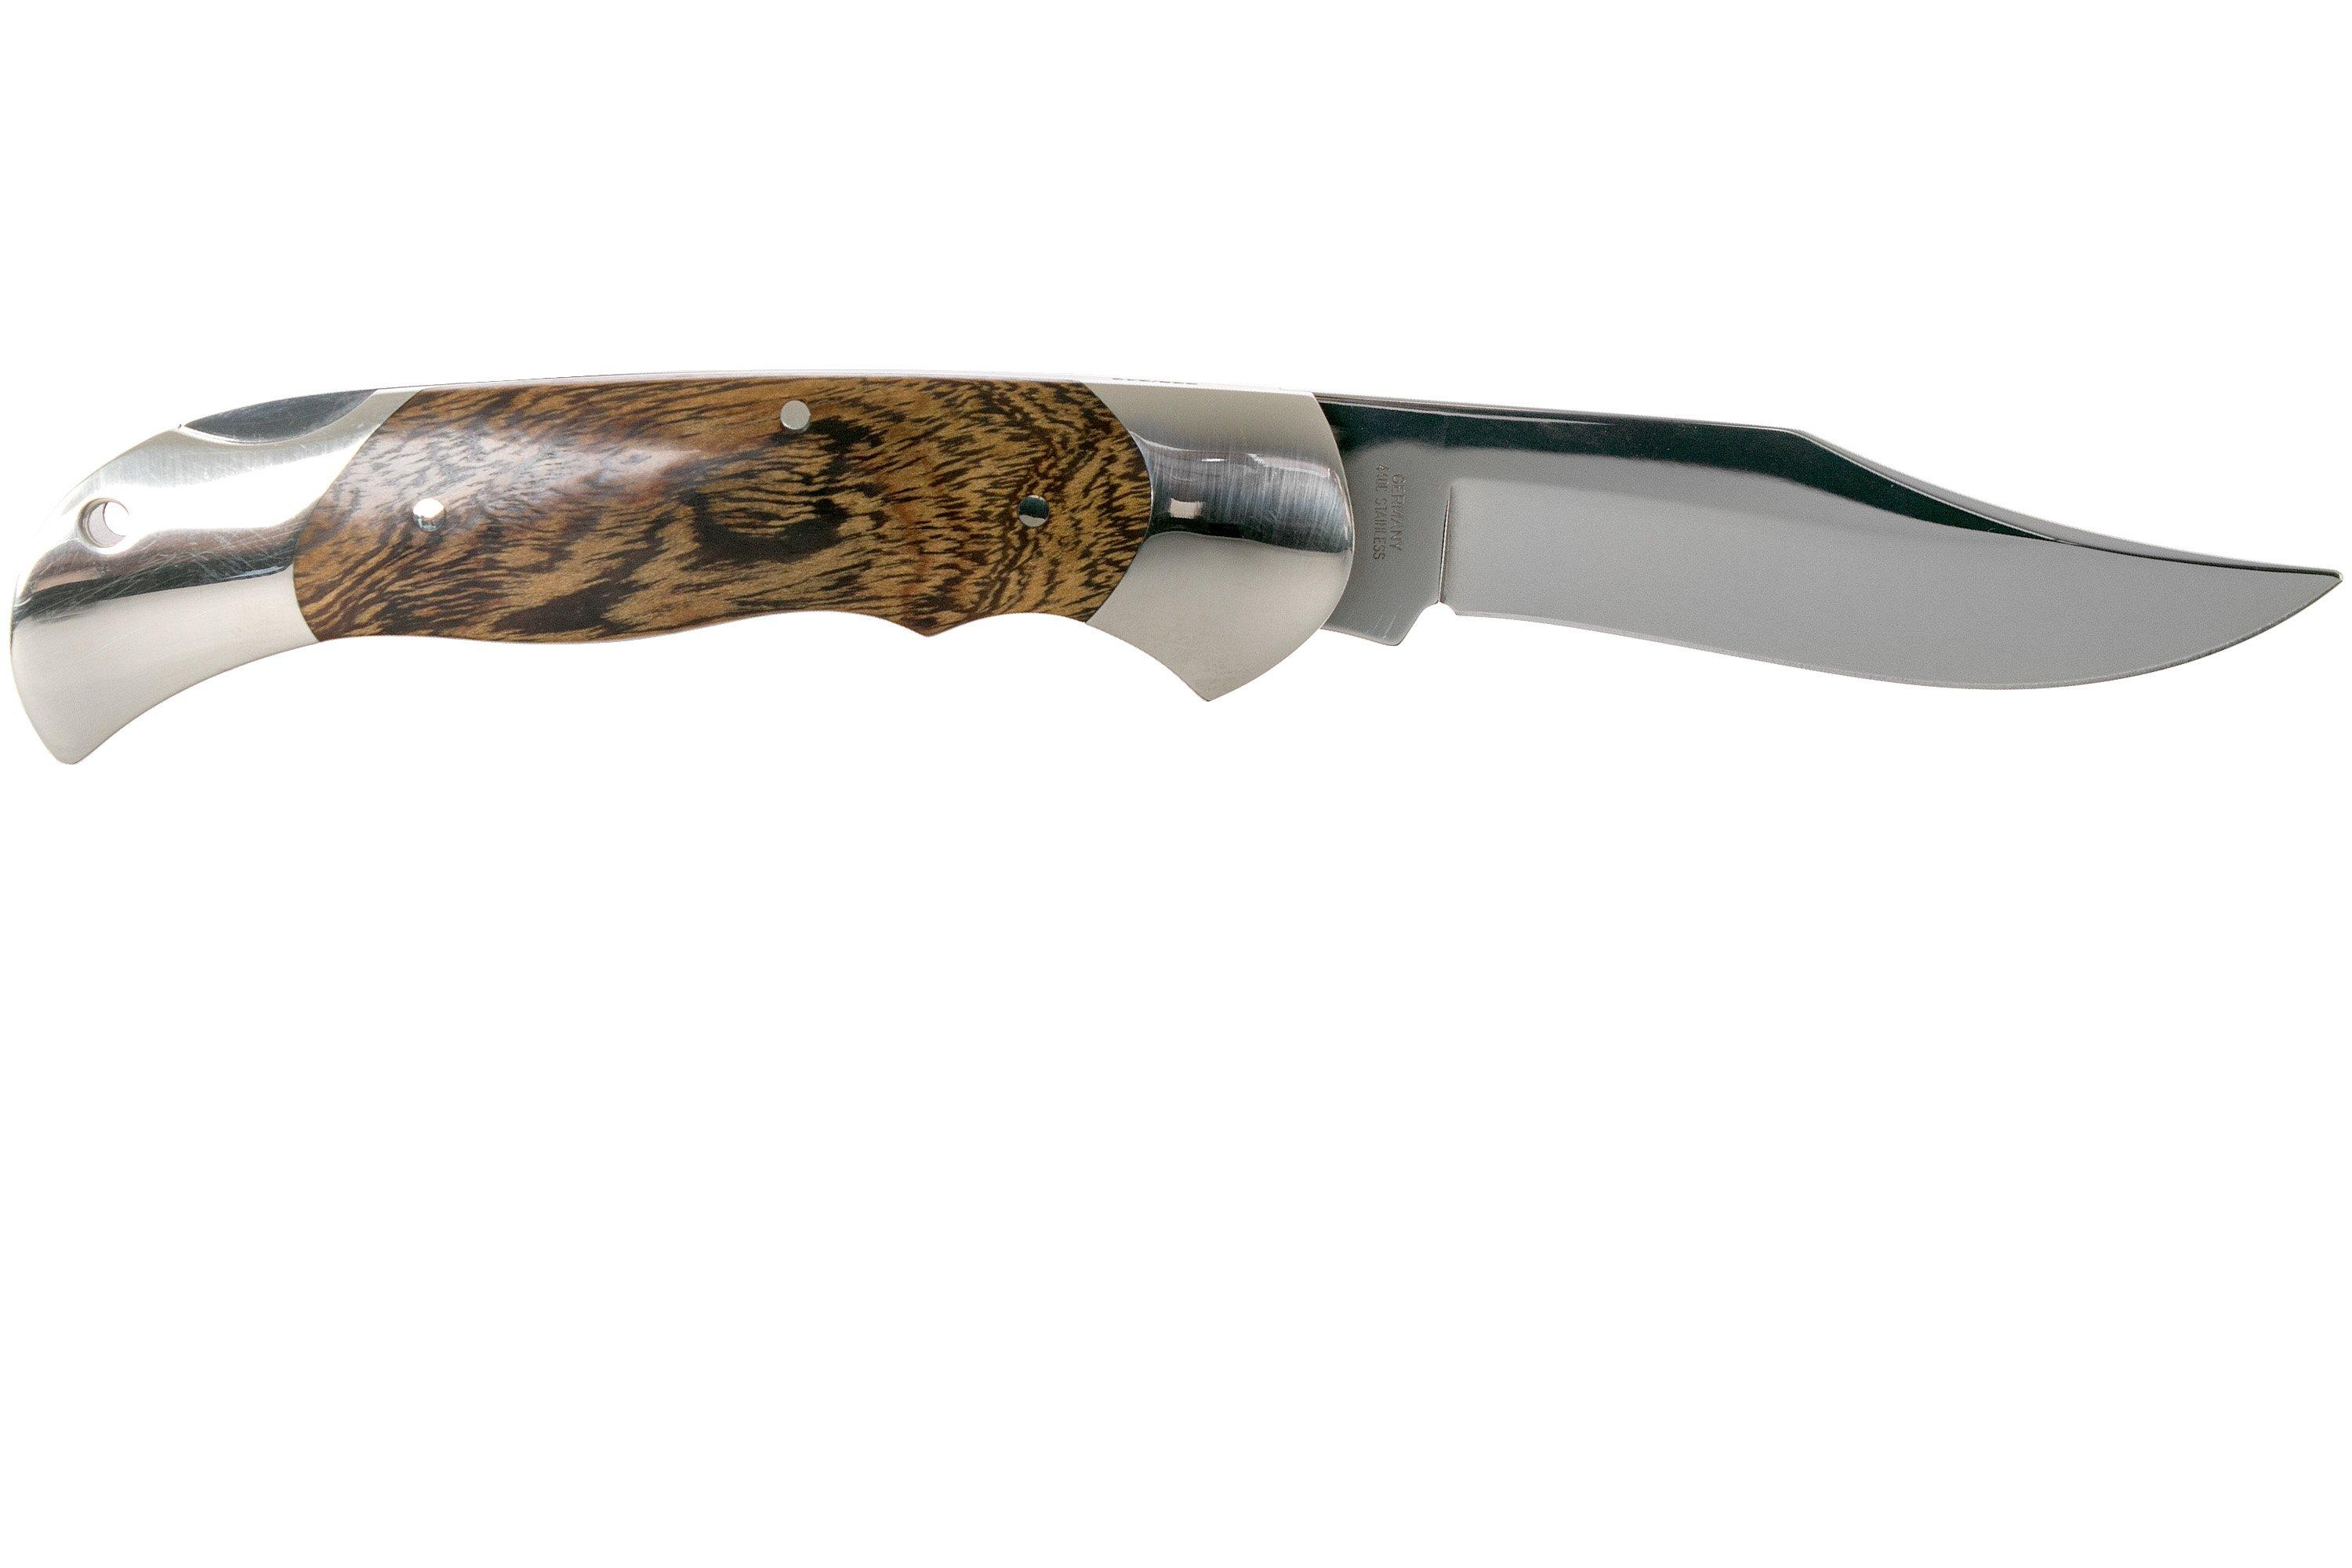 Boker 113002 Optima Rosewood - Knives for Sale